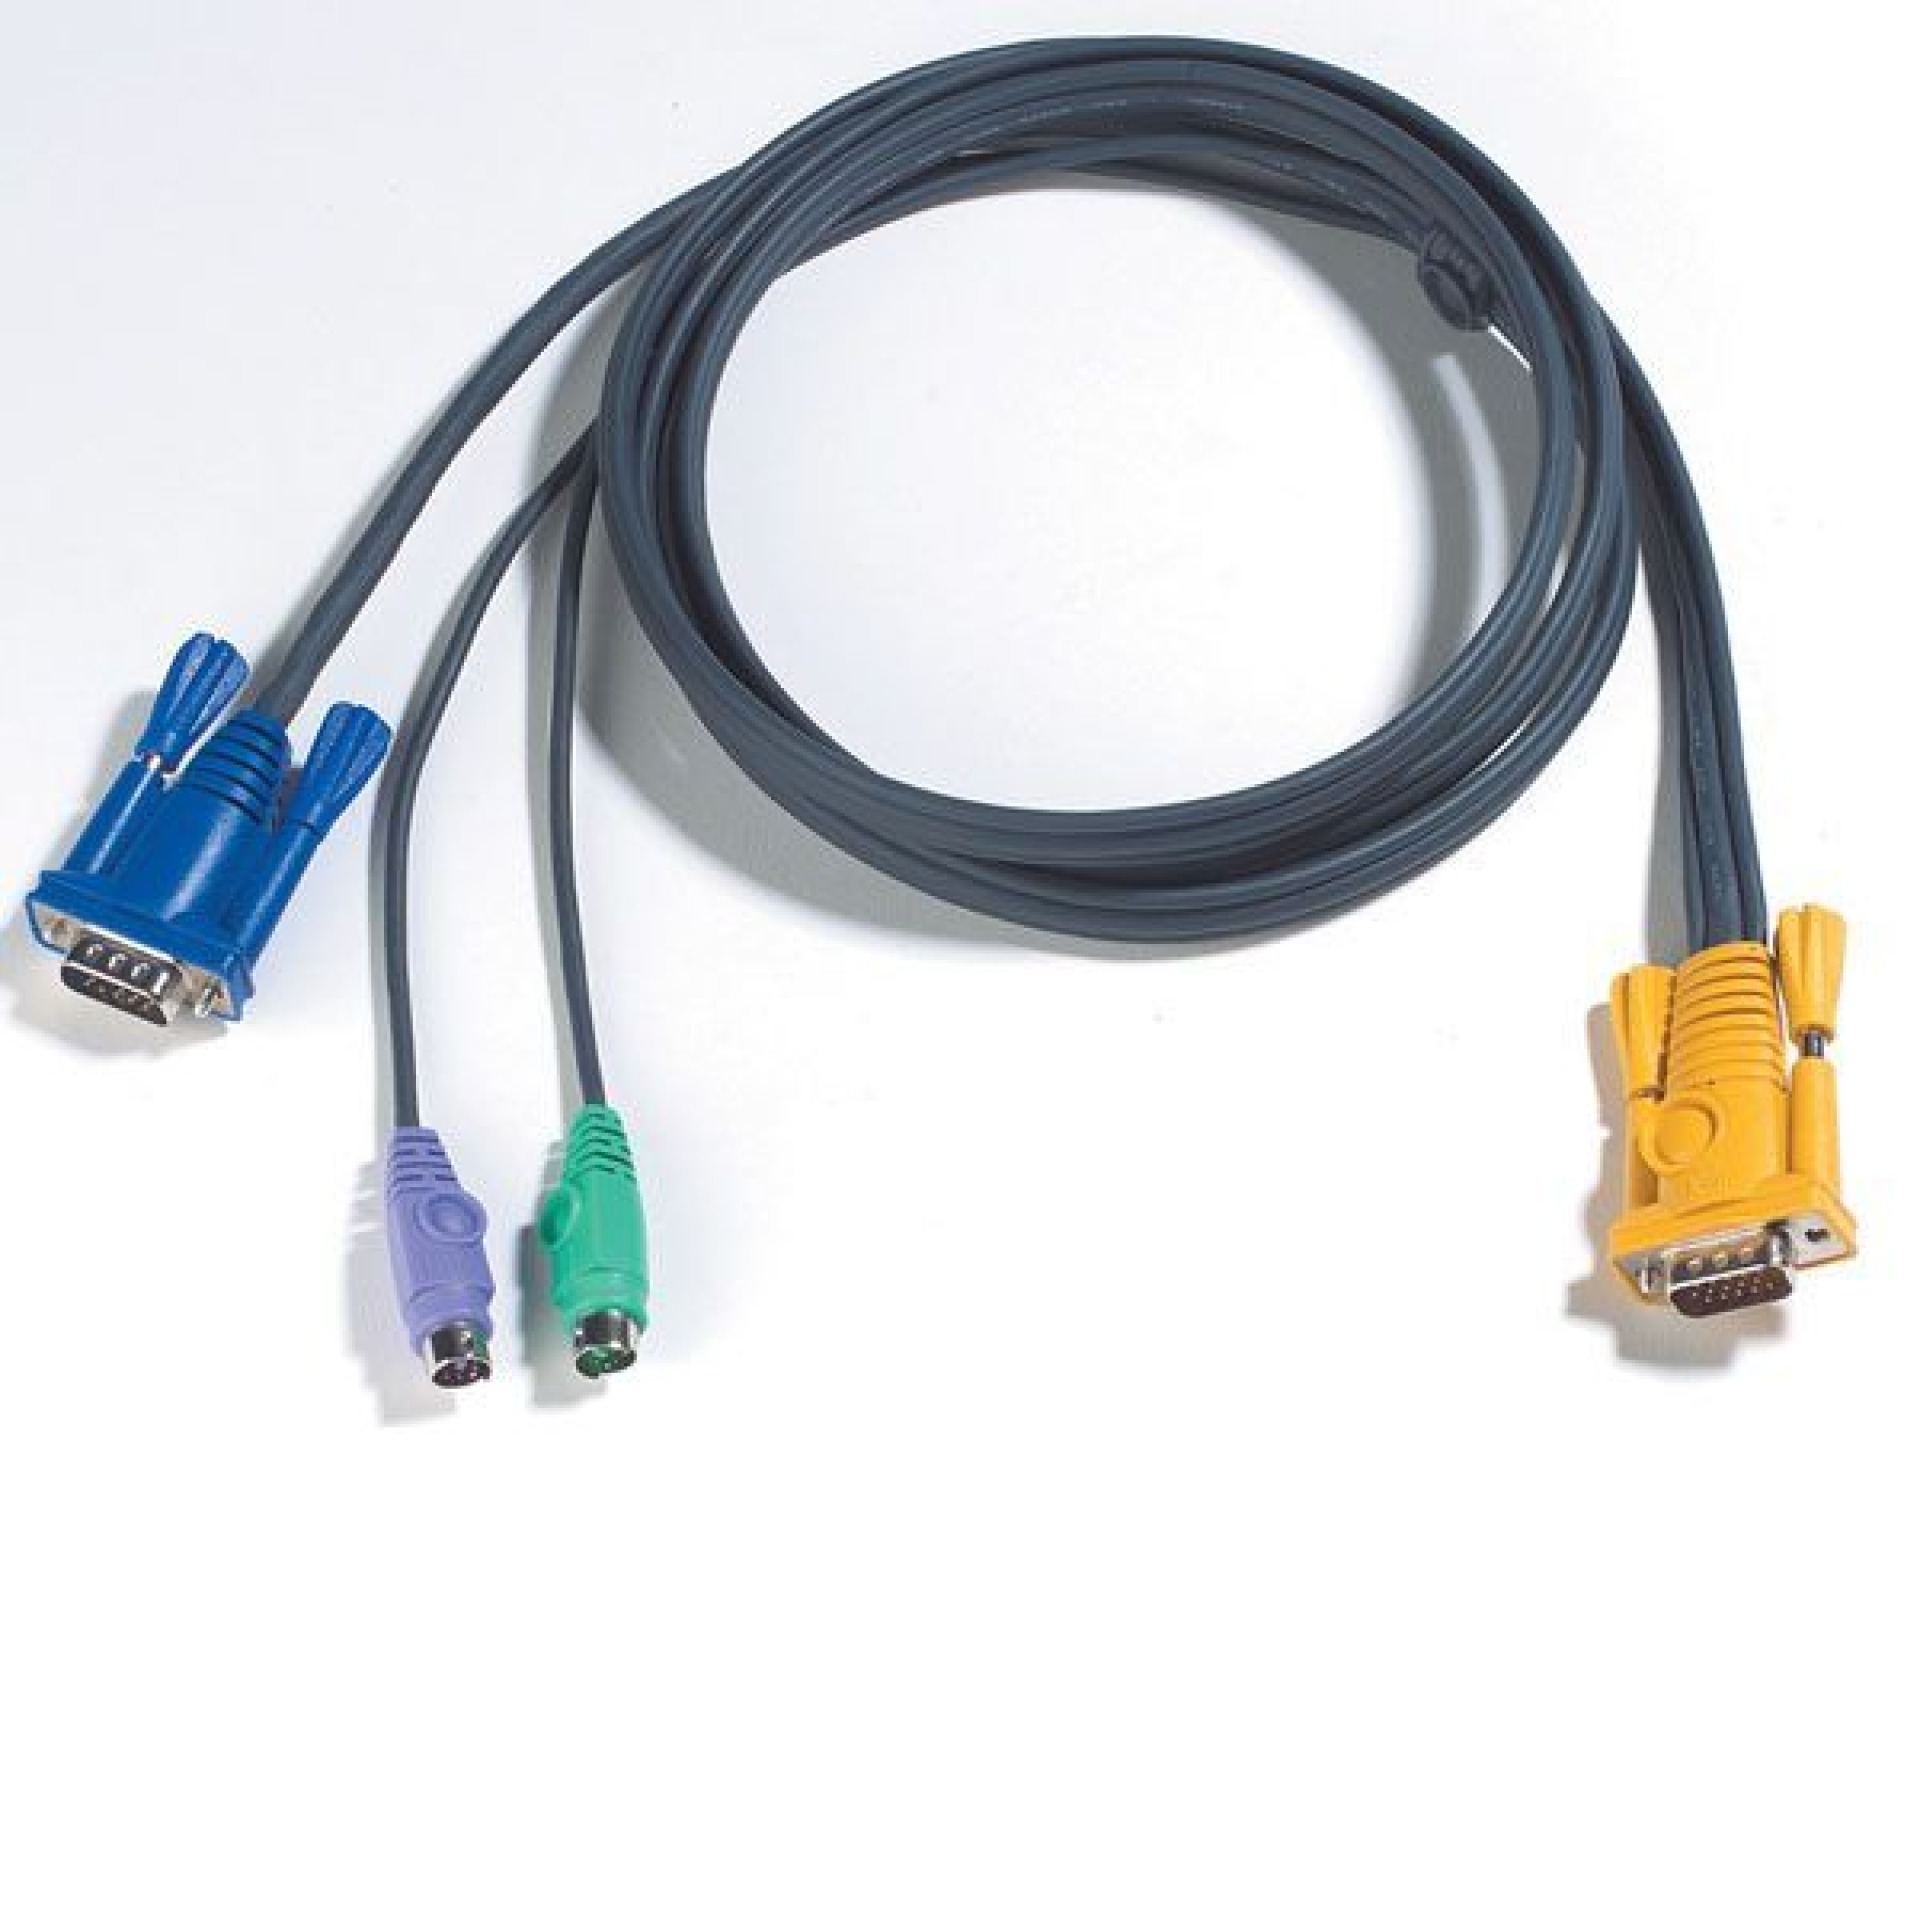 KVM PS/2 Cable 1.8m